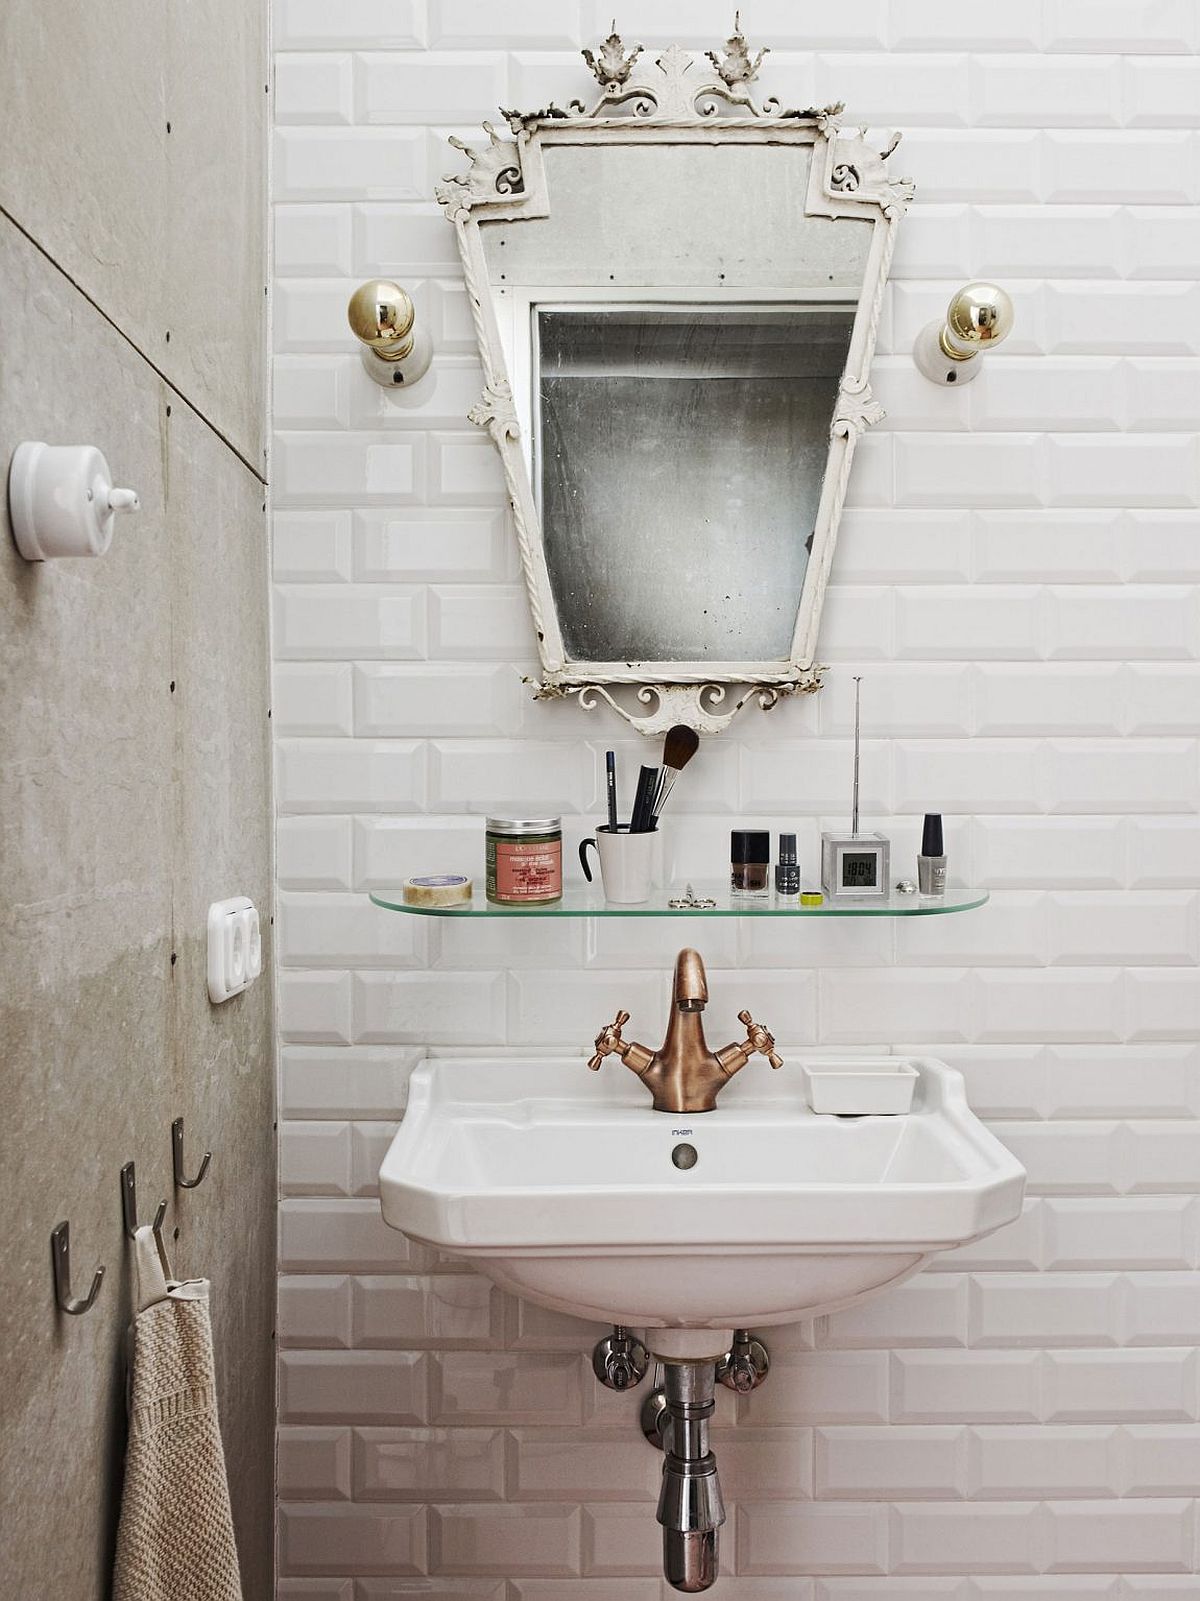 Retro-industrial-bathroom-of-the-Budapest-apartment-with-tiled-backsplash